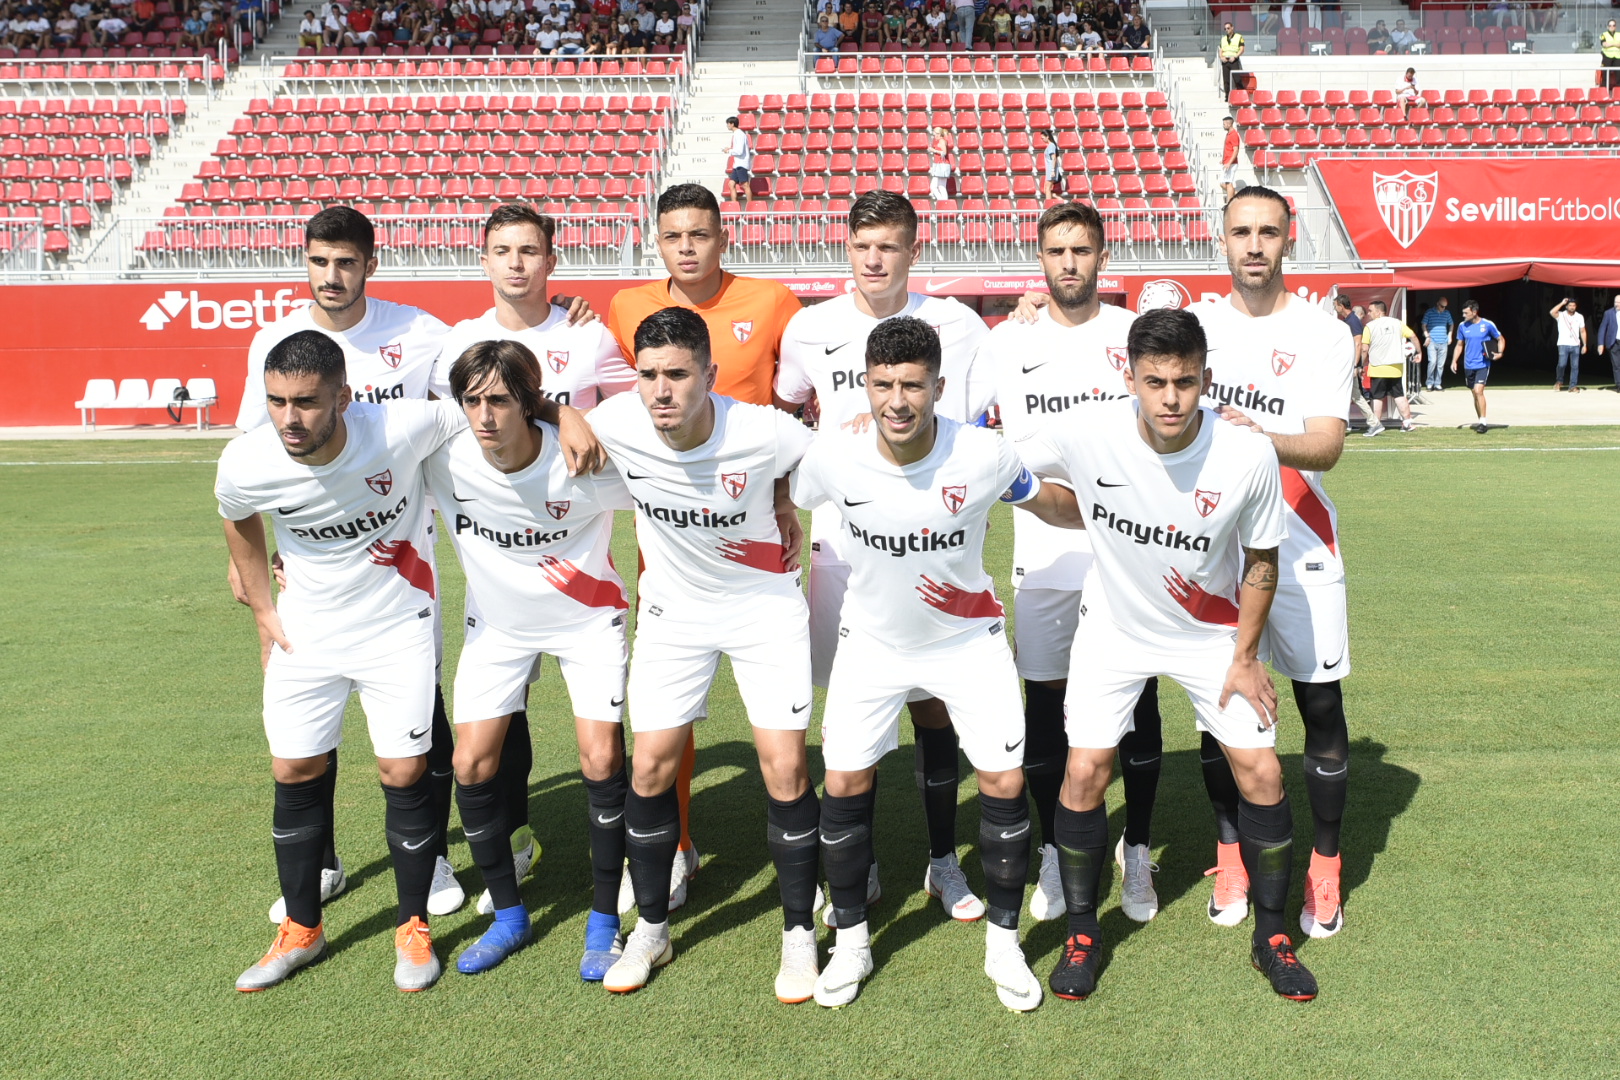 Sevilla Atlético's starting XI against UD Ibiza